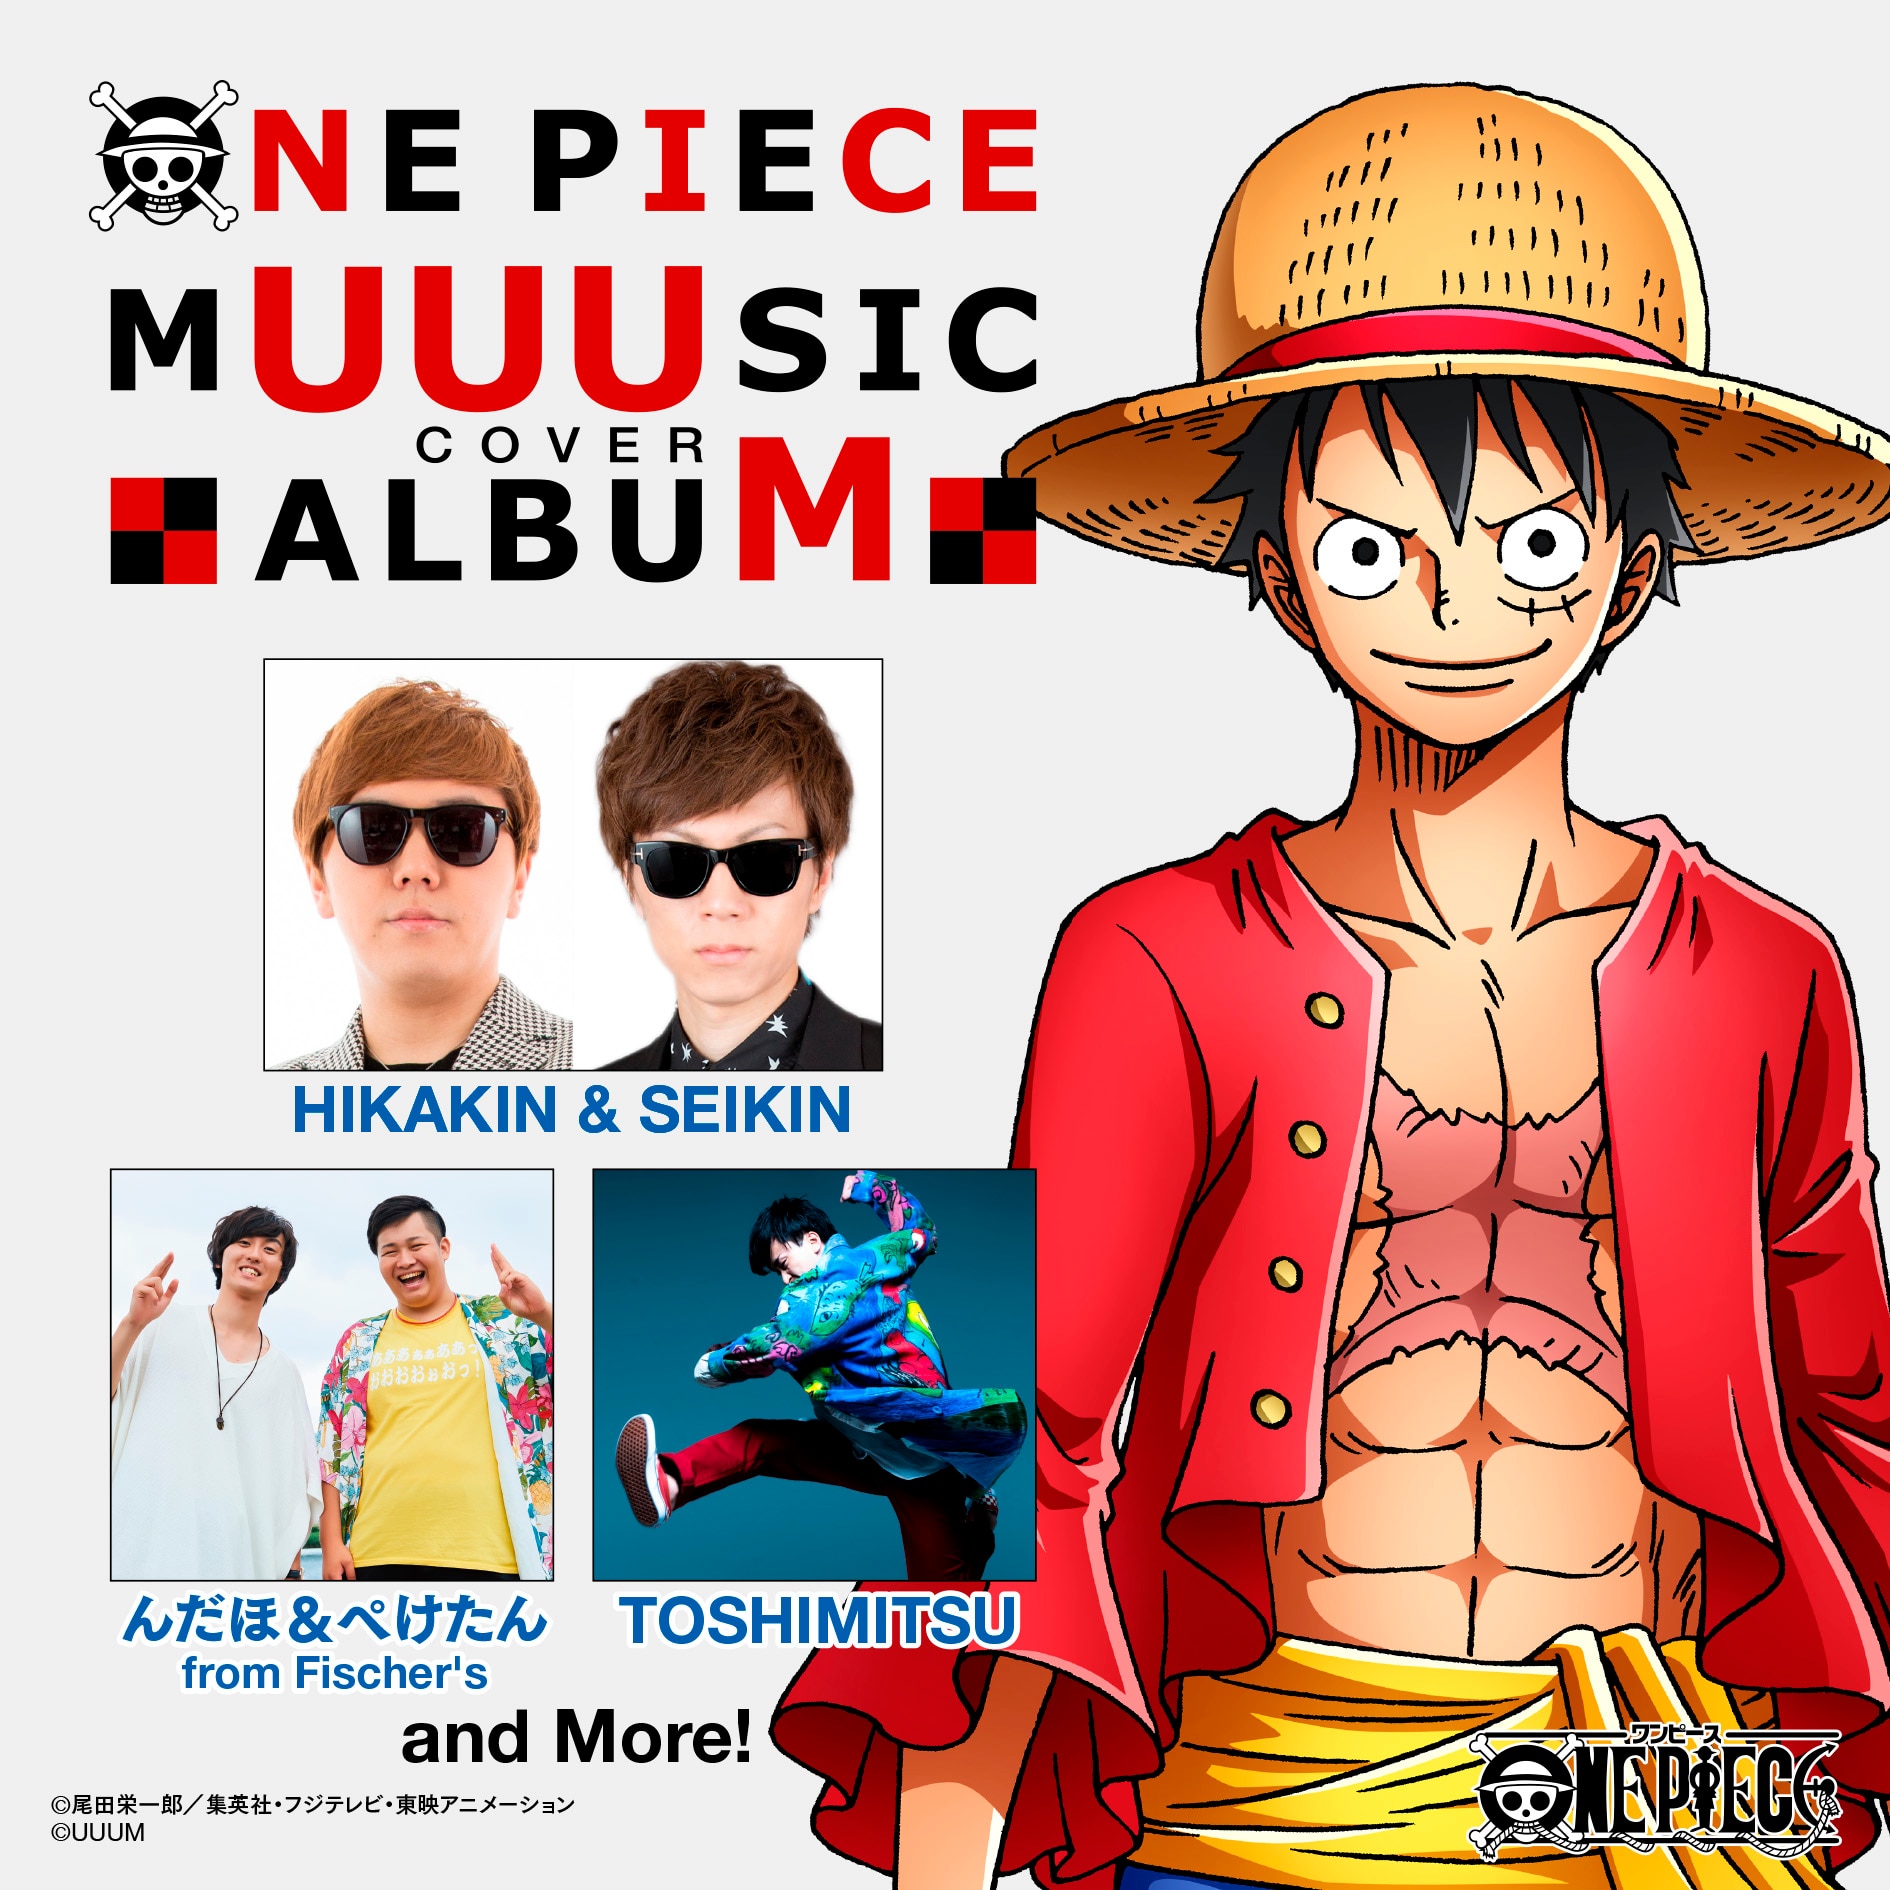 One Piece Muuusic Cover Album 5月27日発売決定 Hikakin Seikin んだほ ぺけたん From Fischer S Toshimitsuからコメントが到着 News One Piece ワンピース Dvd公式サイト